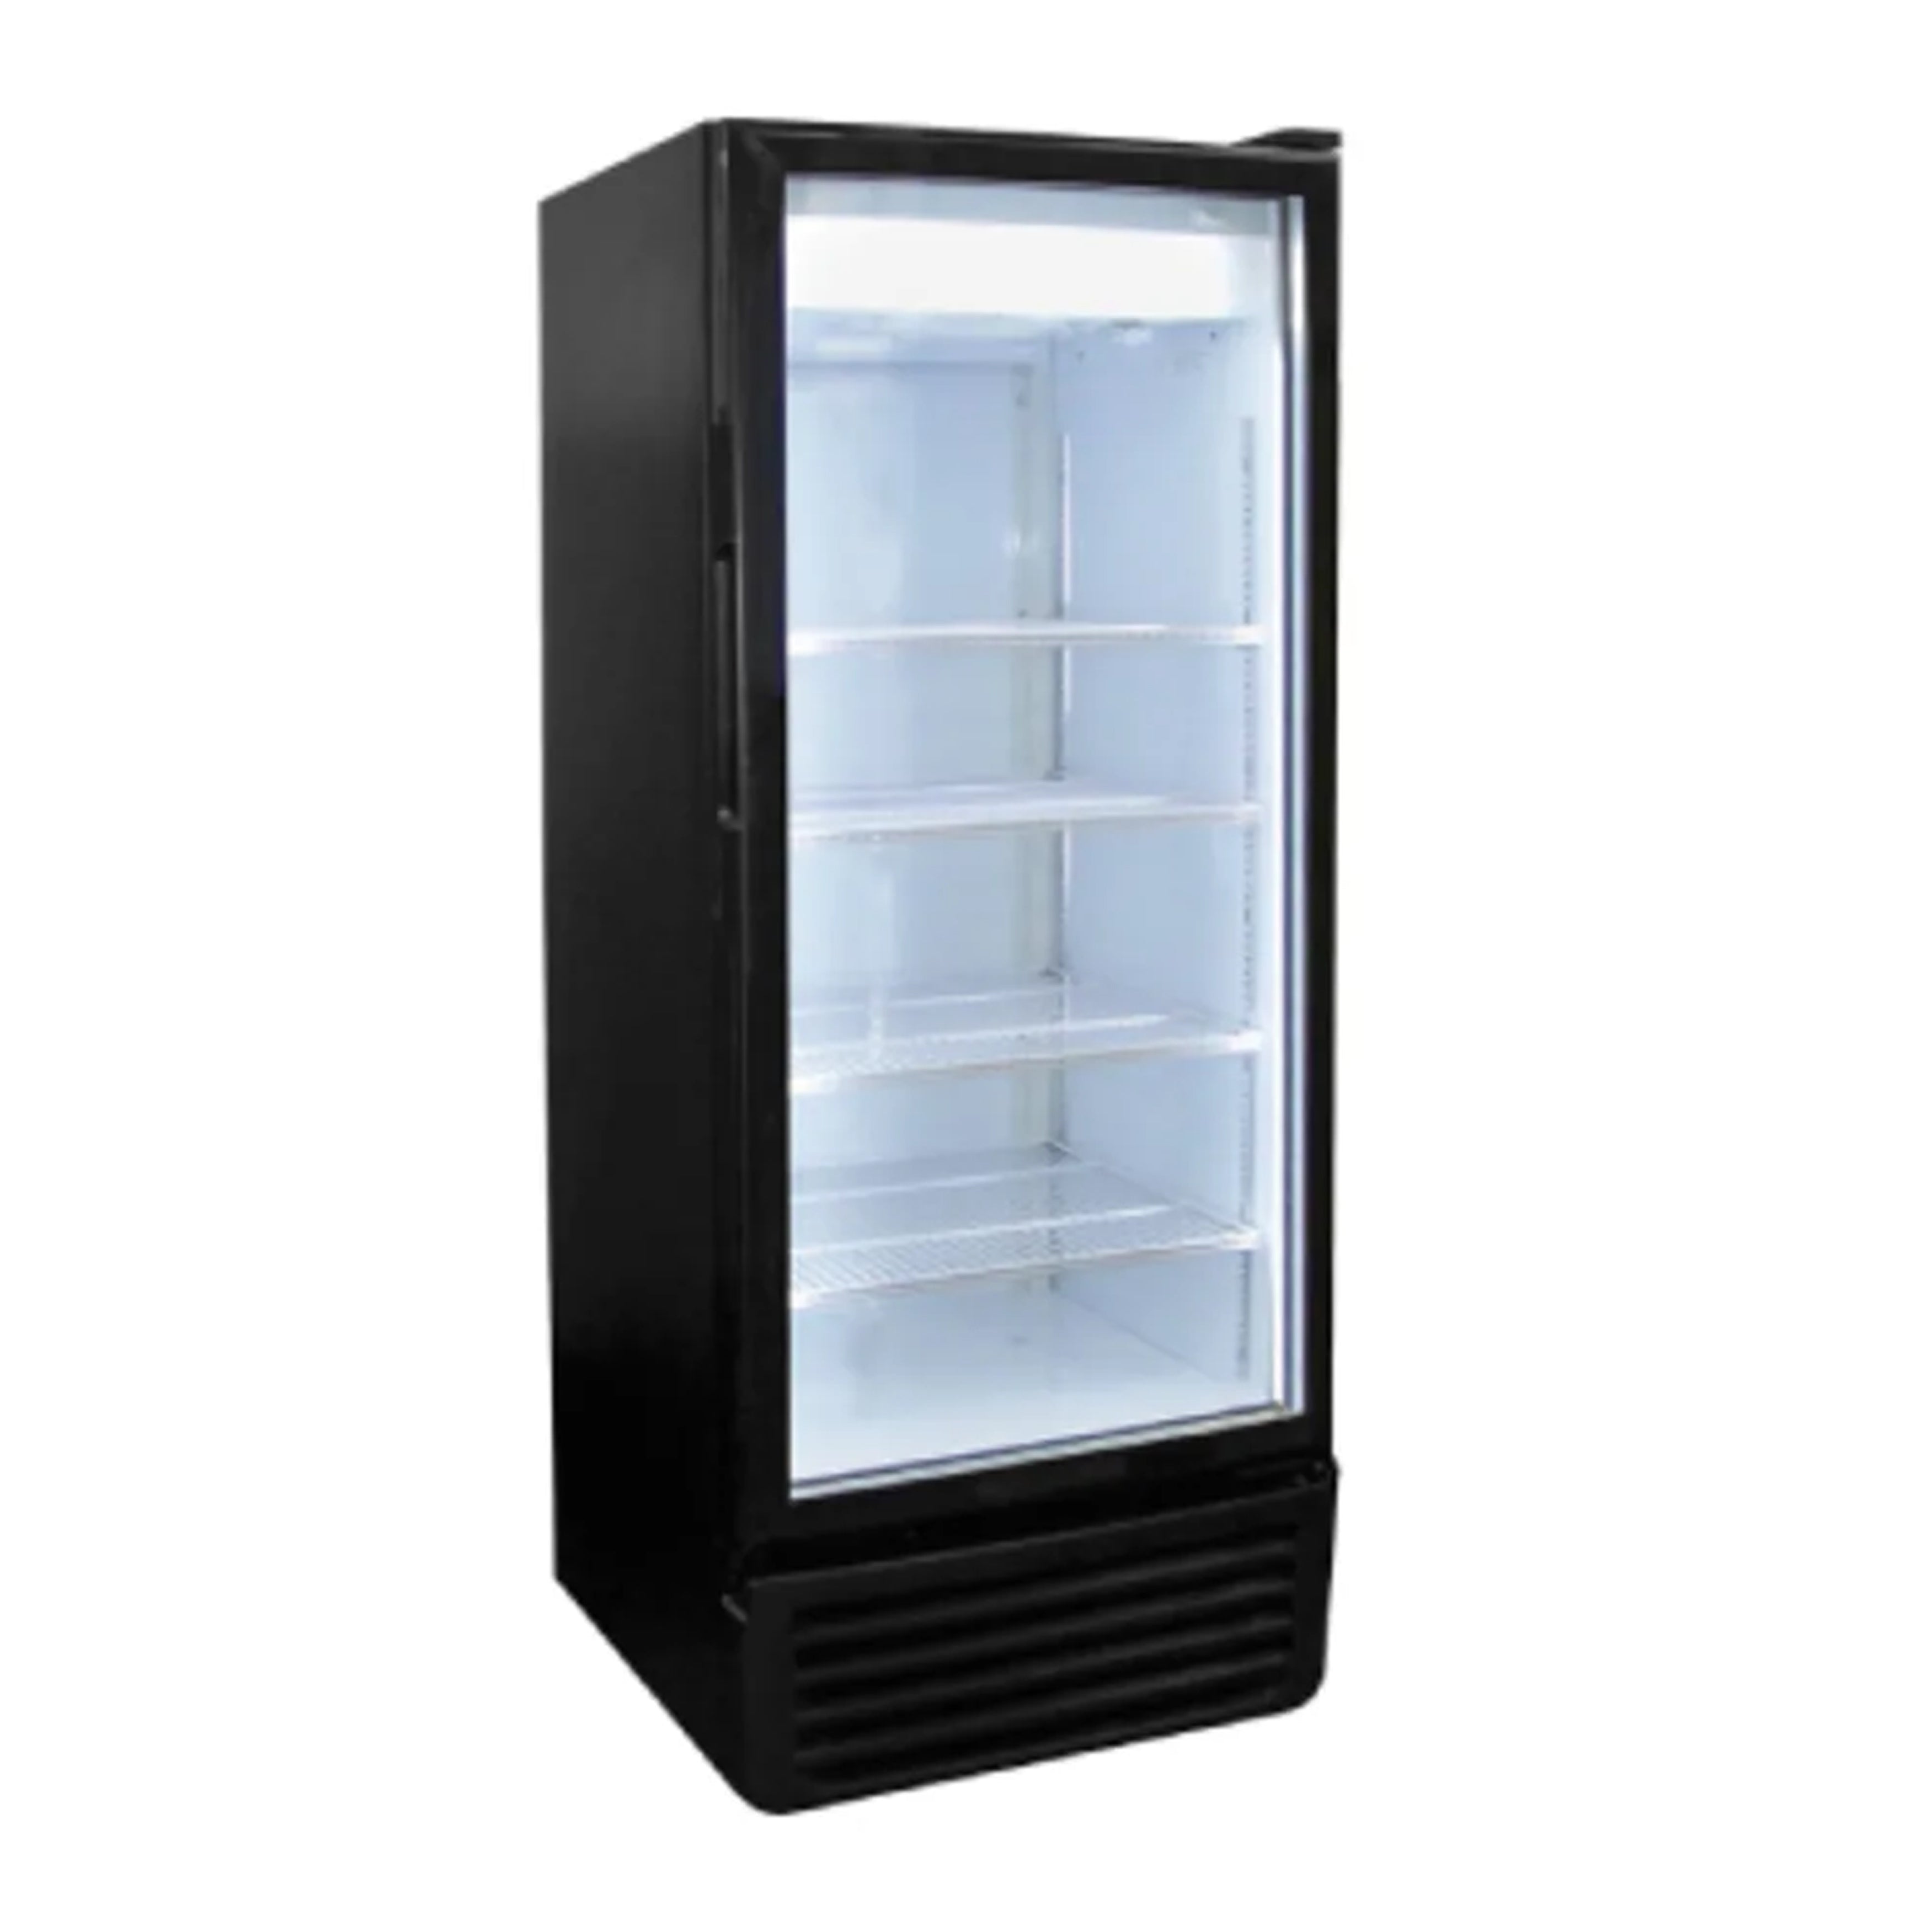 Excellence Industries - GDR-5HC, 20" Commercial 1 Glass Door Merchandiser Refrigerator 5 cu.ft.